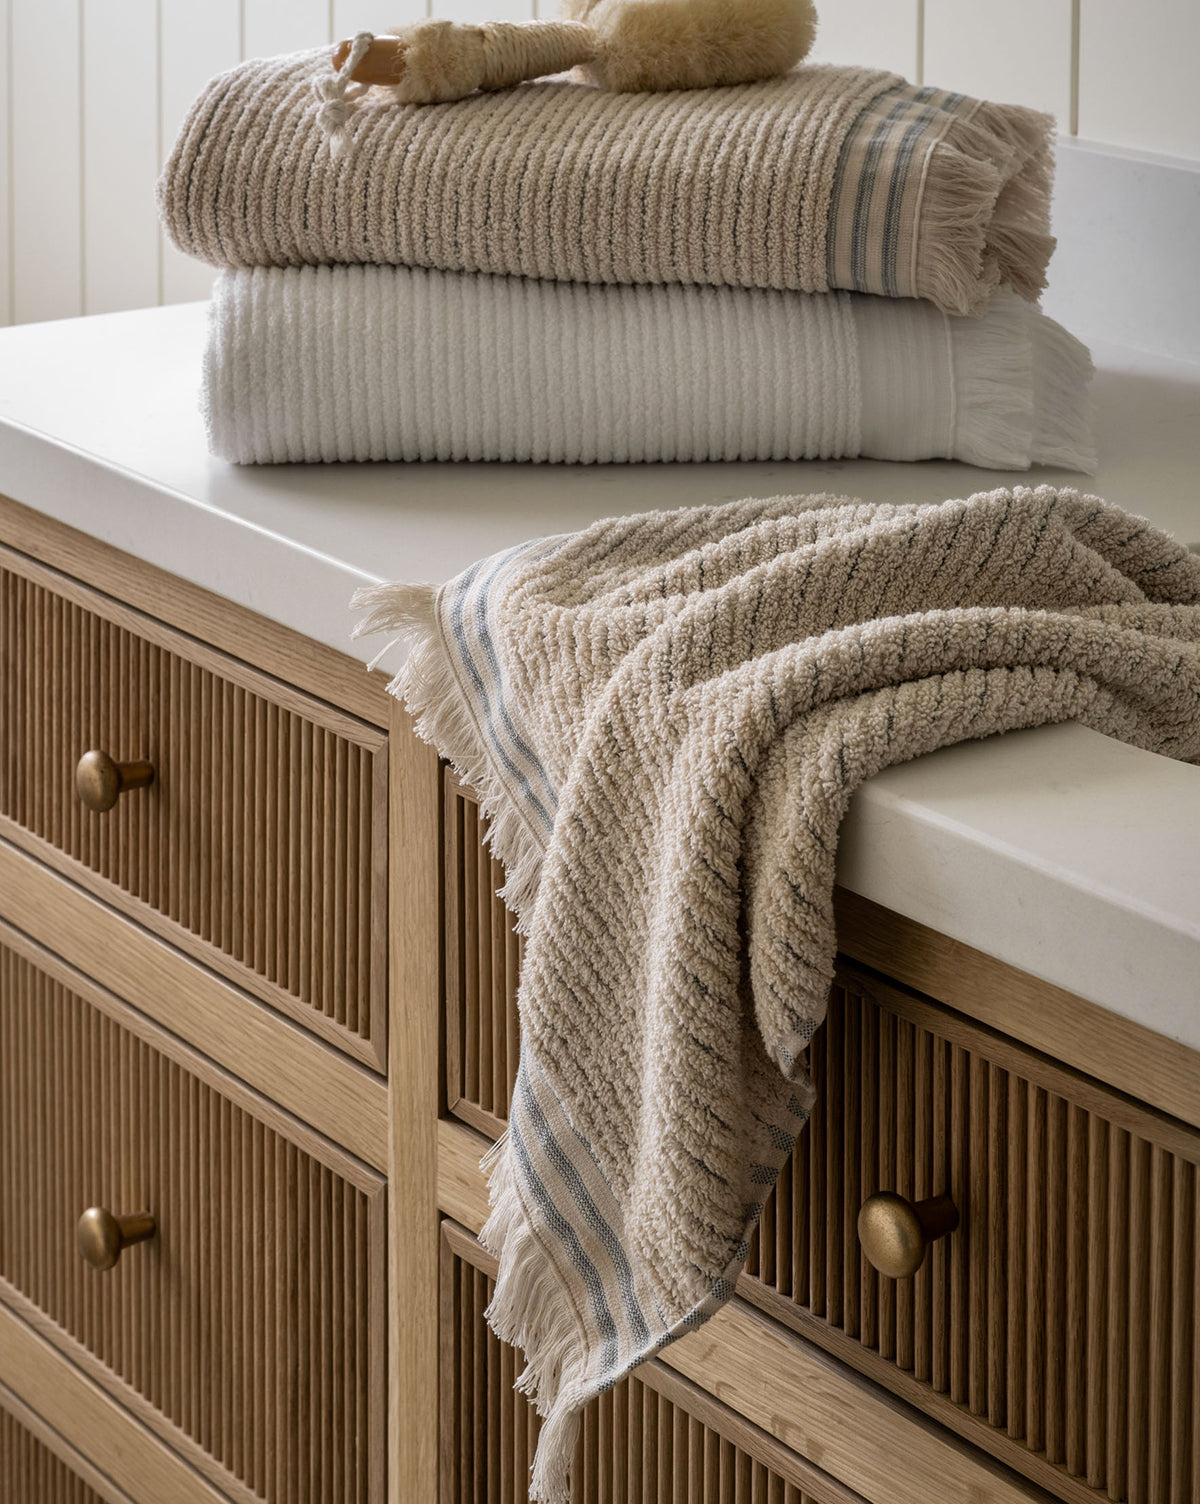 Thin Stripe Linen Hand Towel – McGee & Co.